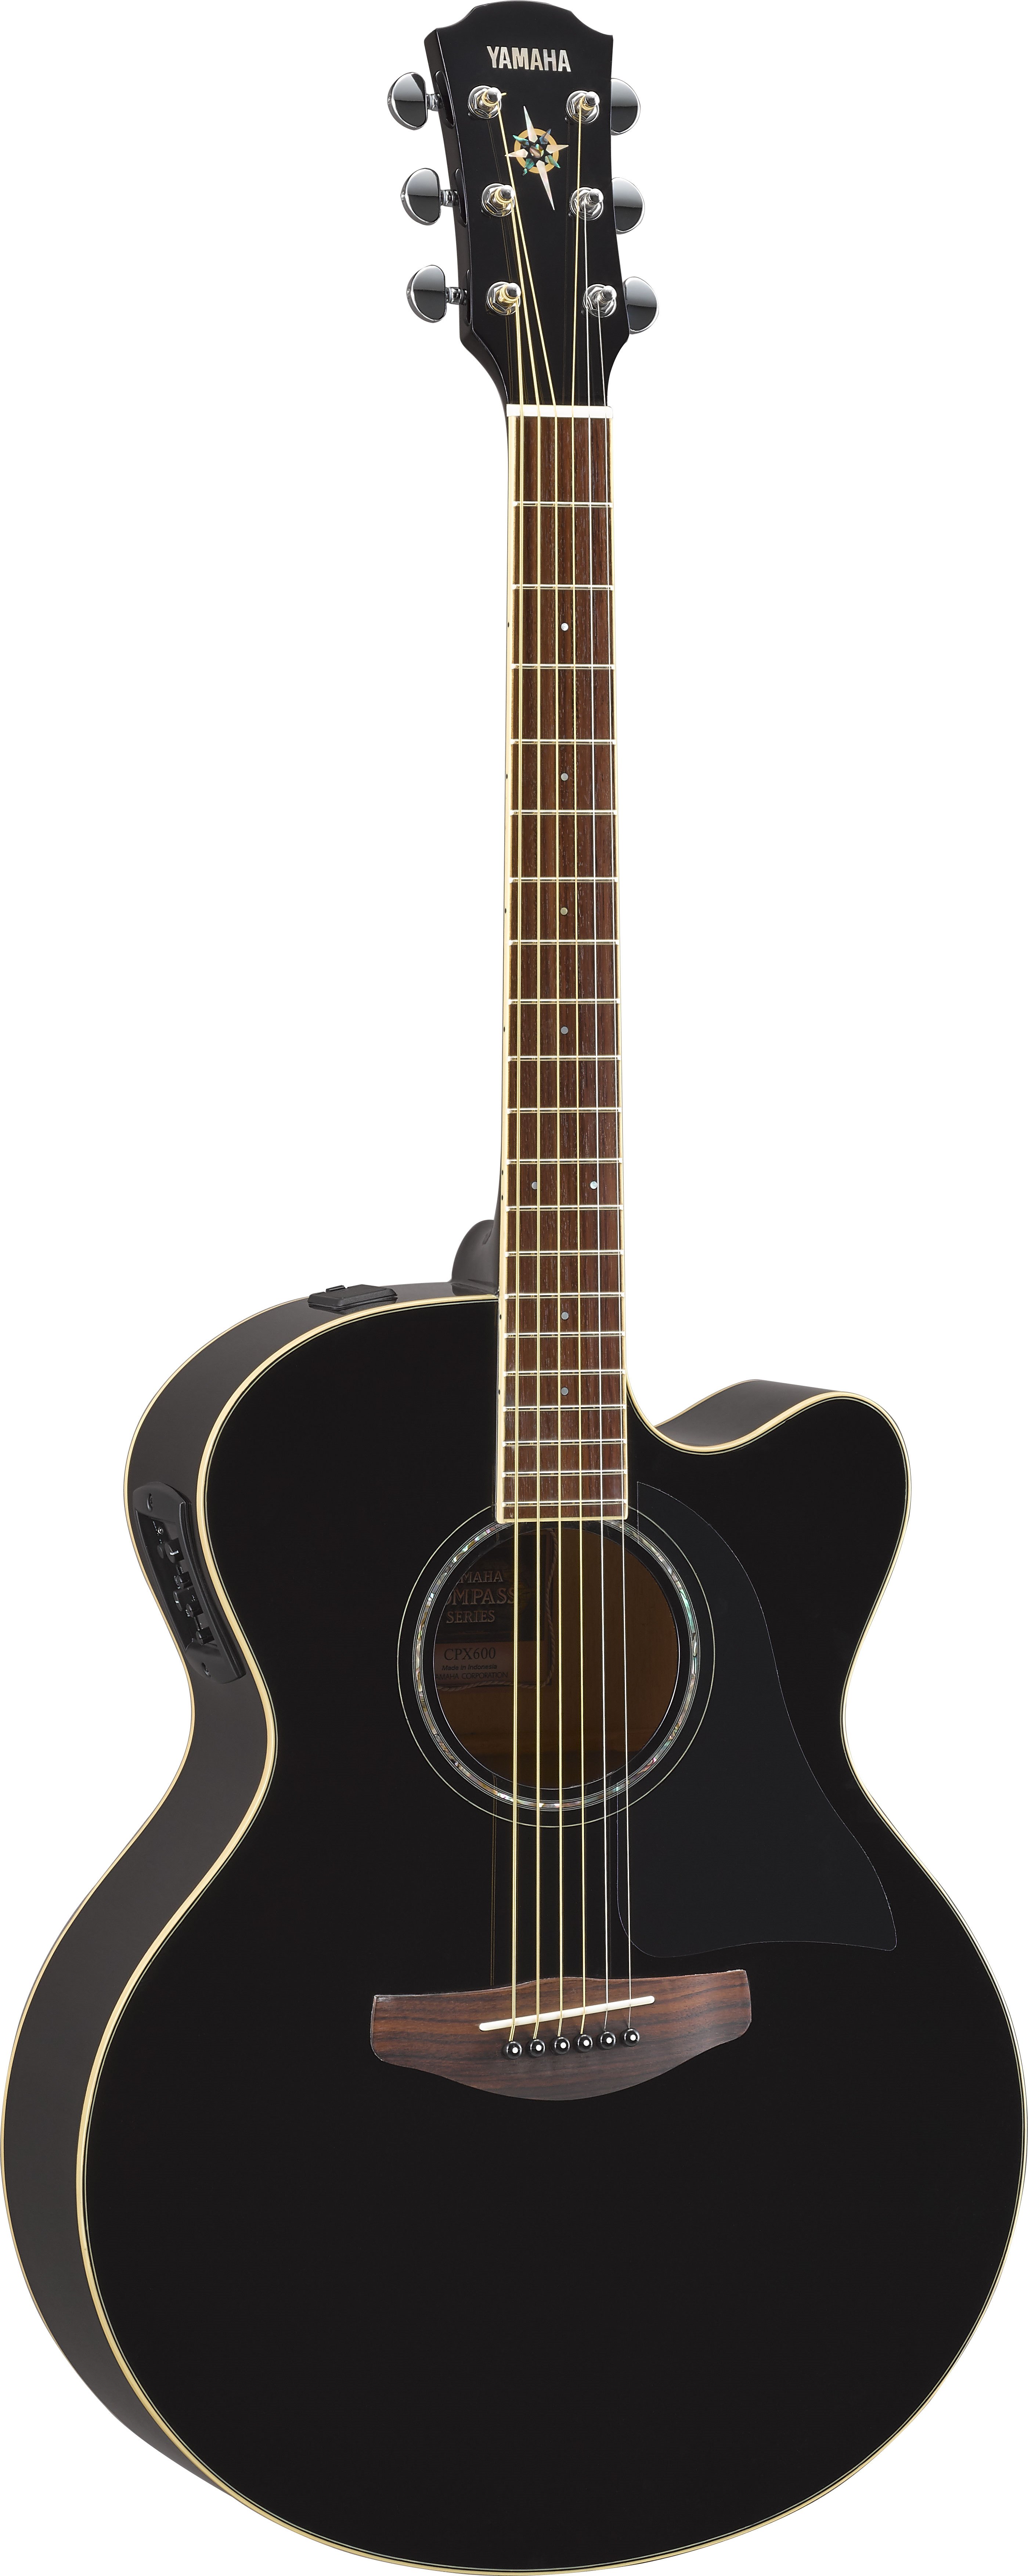 Yamaha CPX600 Western Guitar (Sort)